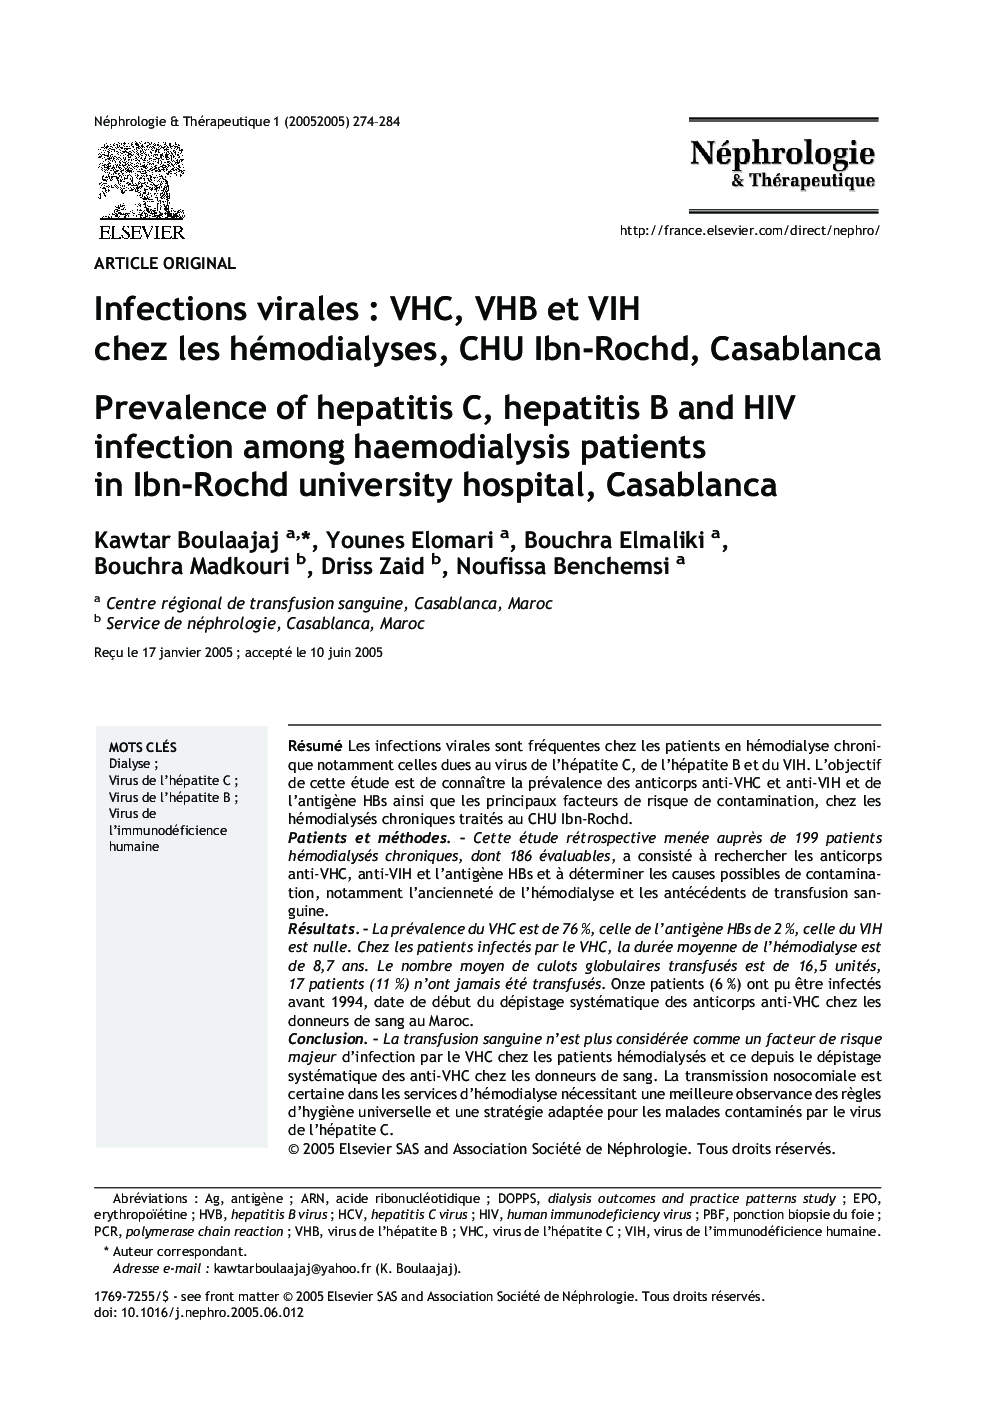 Infections viralesÂ : VHC, VHB et VIH chez les hémodialyses, CHU Ibn-Rochd, Casablanca